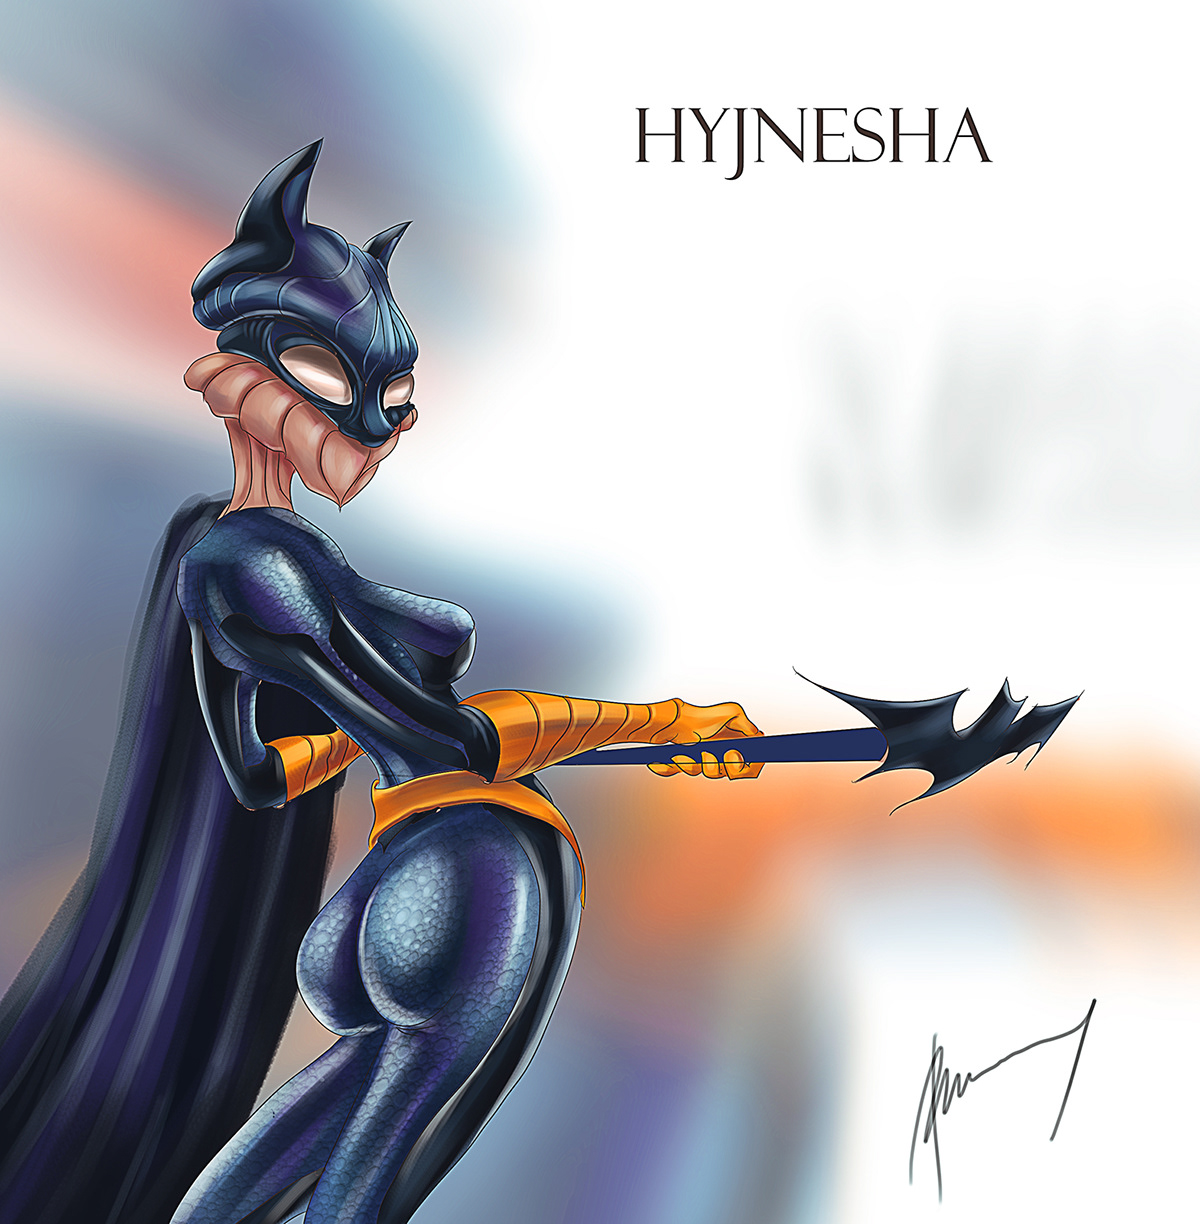 batwoman catwoman dccomics batman anne hathaway